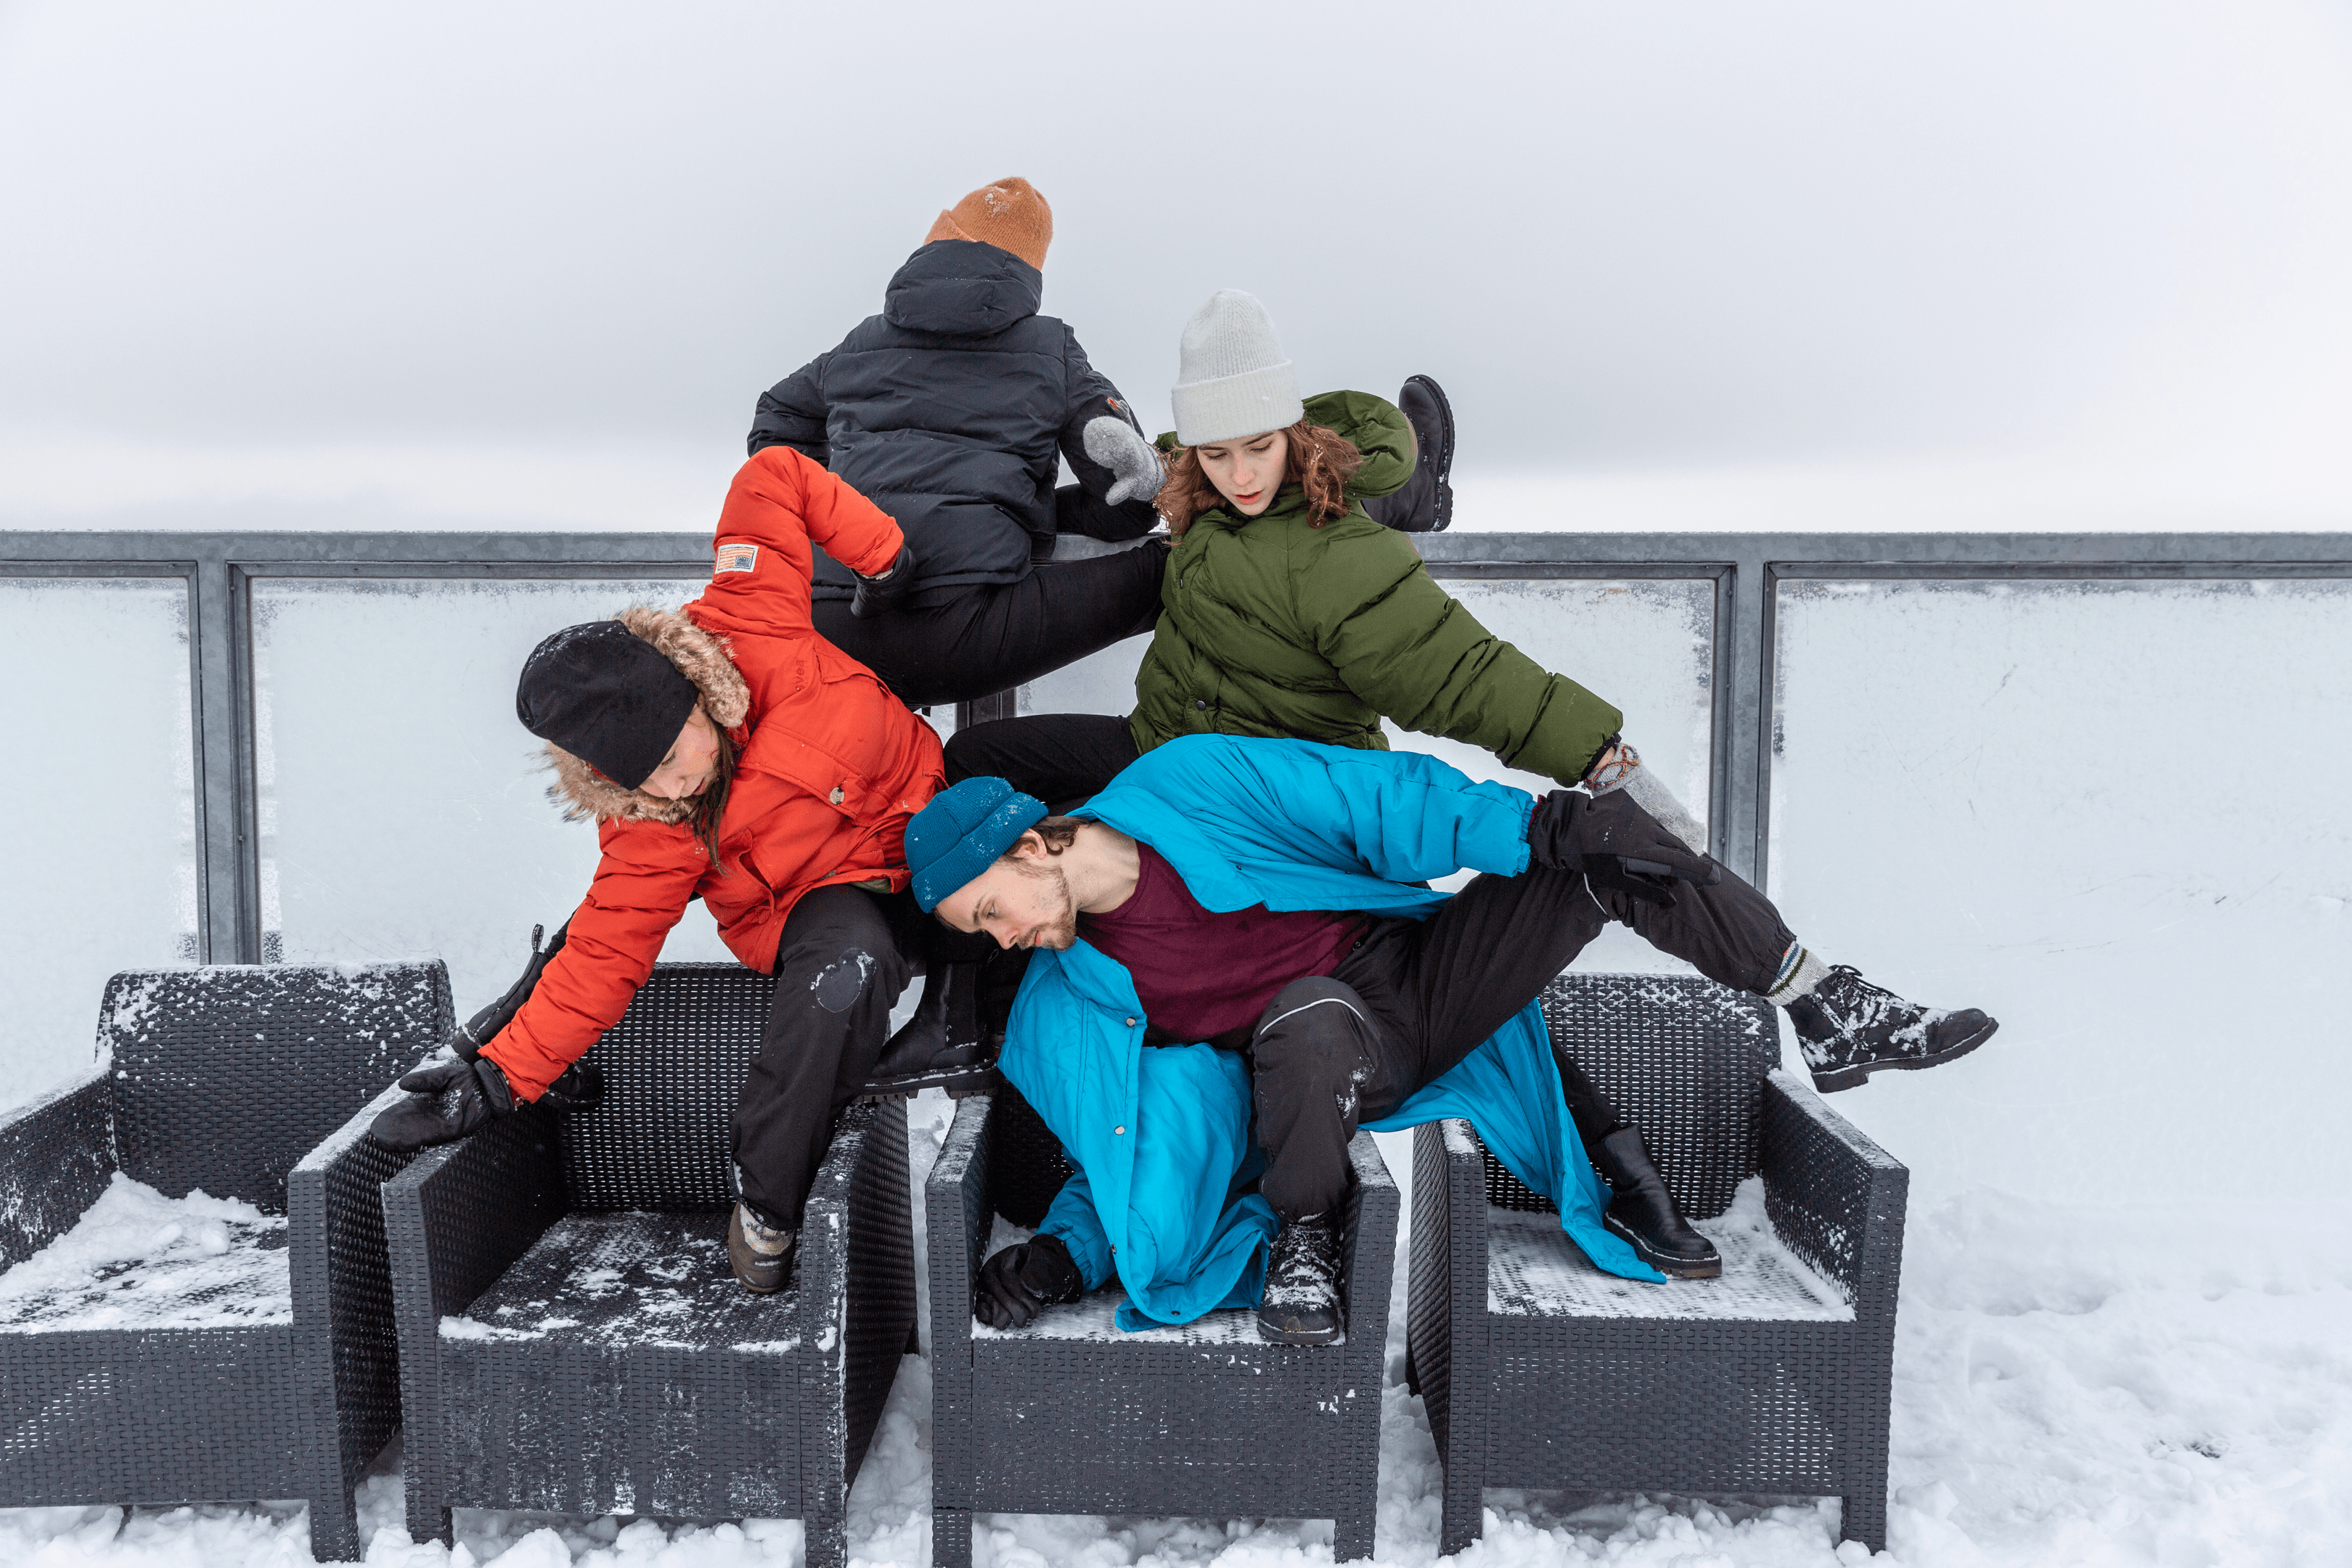 Dancers on Rooftops #93 - Aino, Sakari, Elina and Emmi (Finland, 2022)